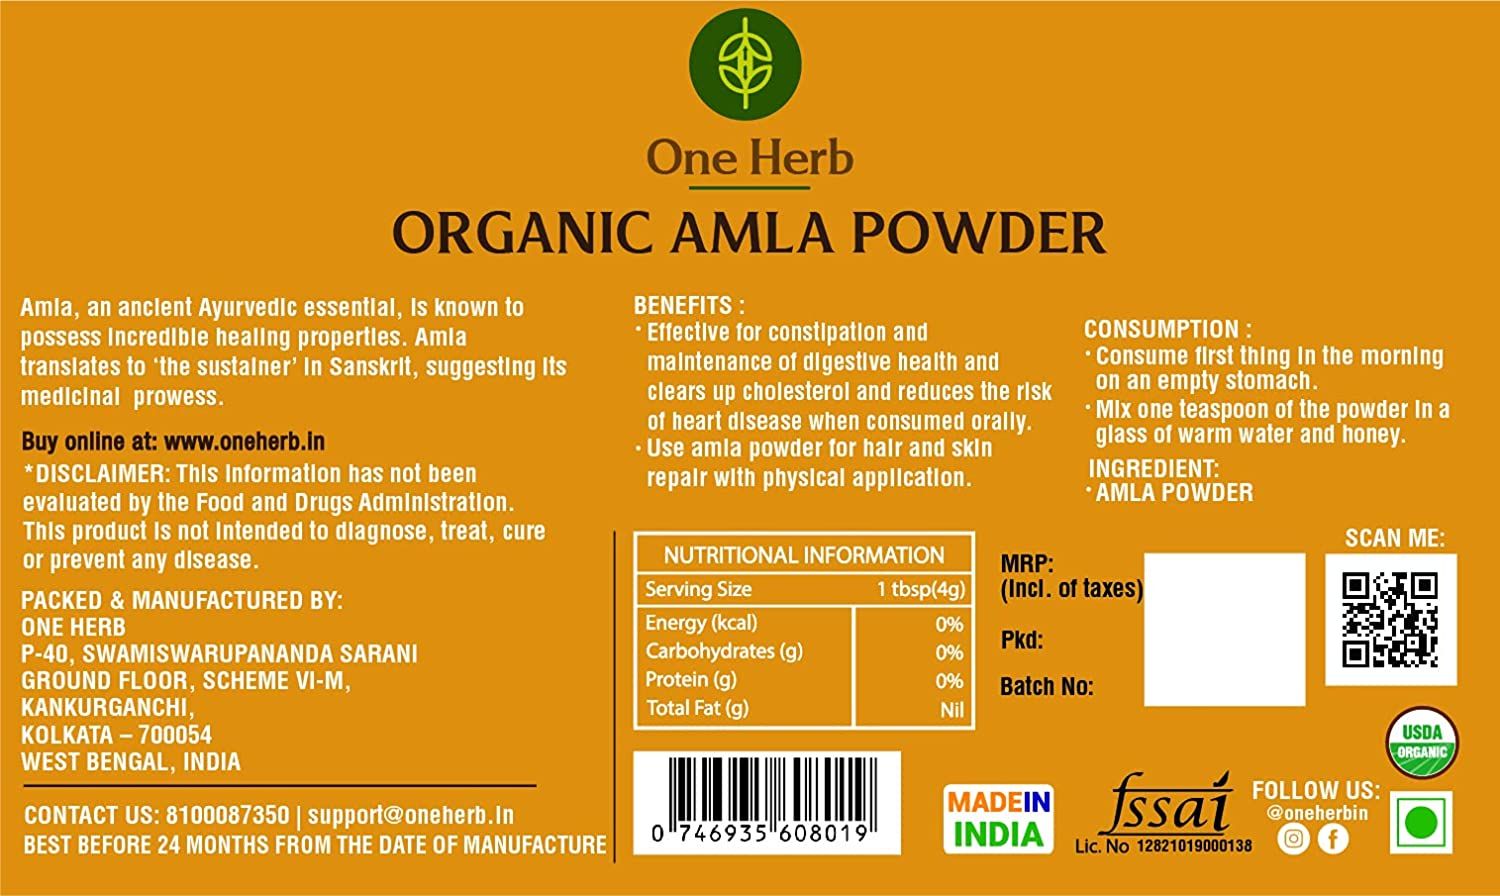 One Herb Organic Amla Powder Image